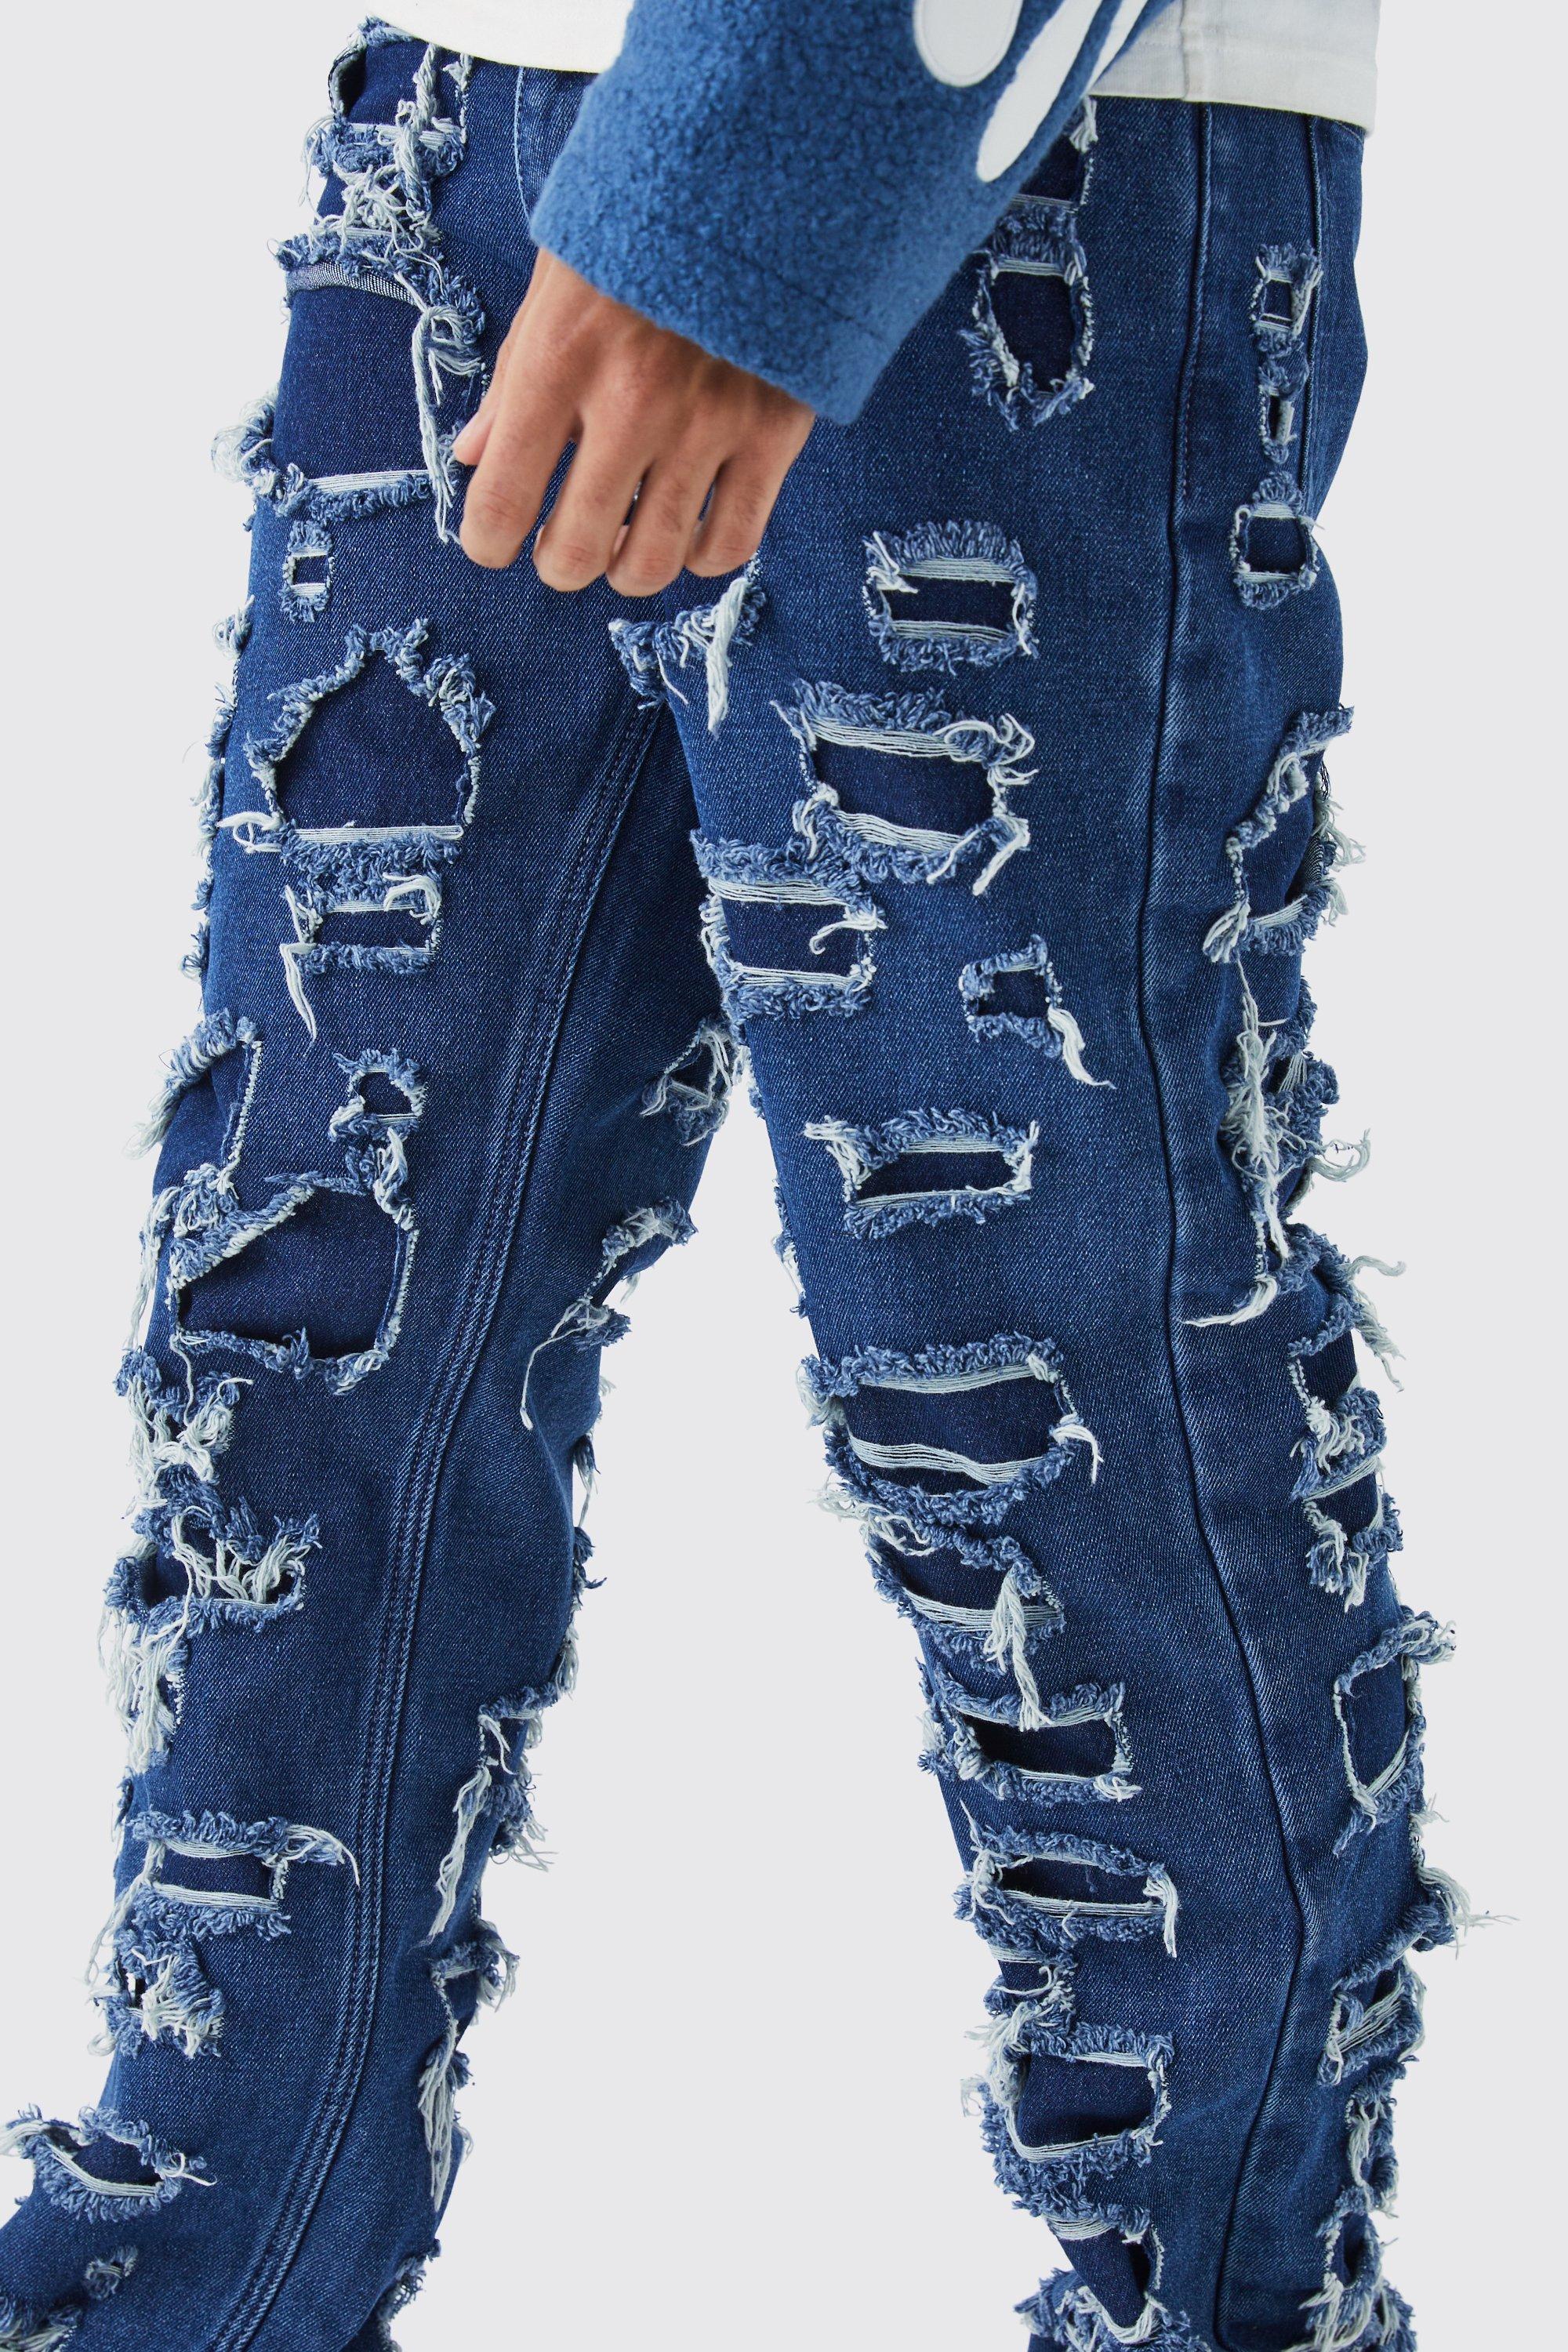 https://media.boohoo.com/i/boohoo/bmm52556_dark%20blue_xl_2/male-dark%20blue-relaxed-rigid-extreme-ripped-jeans